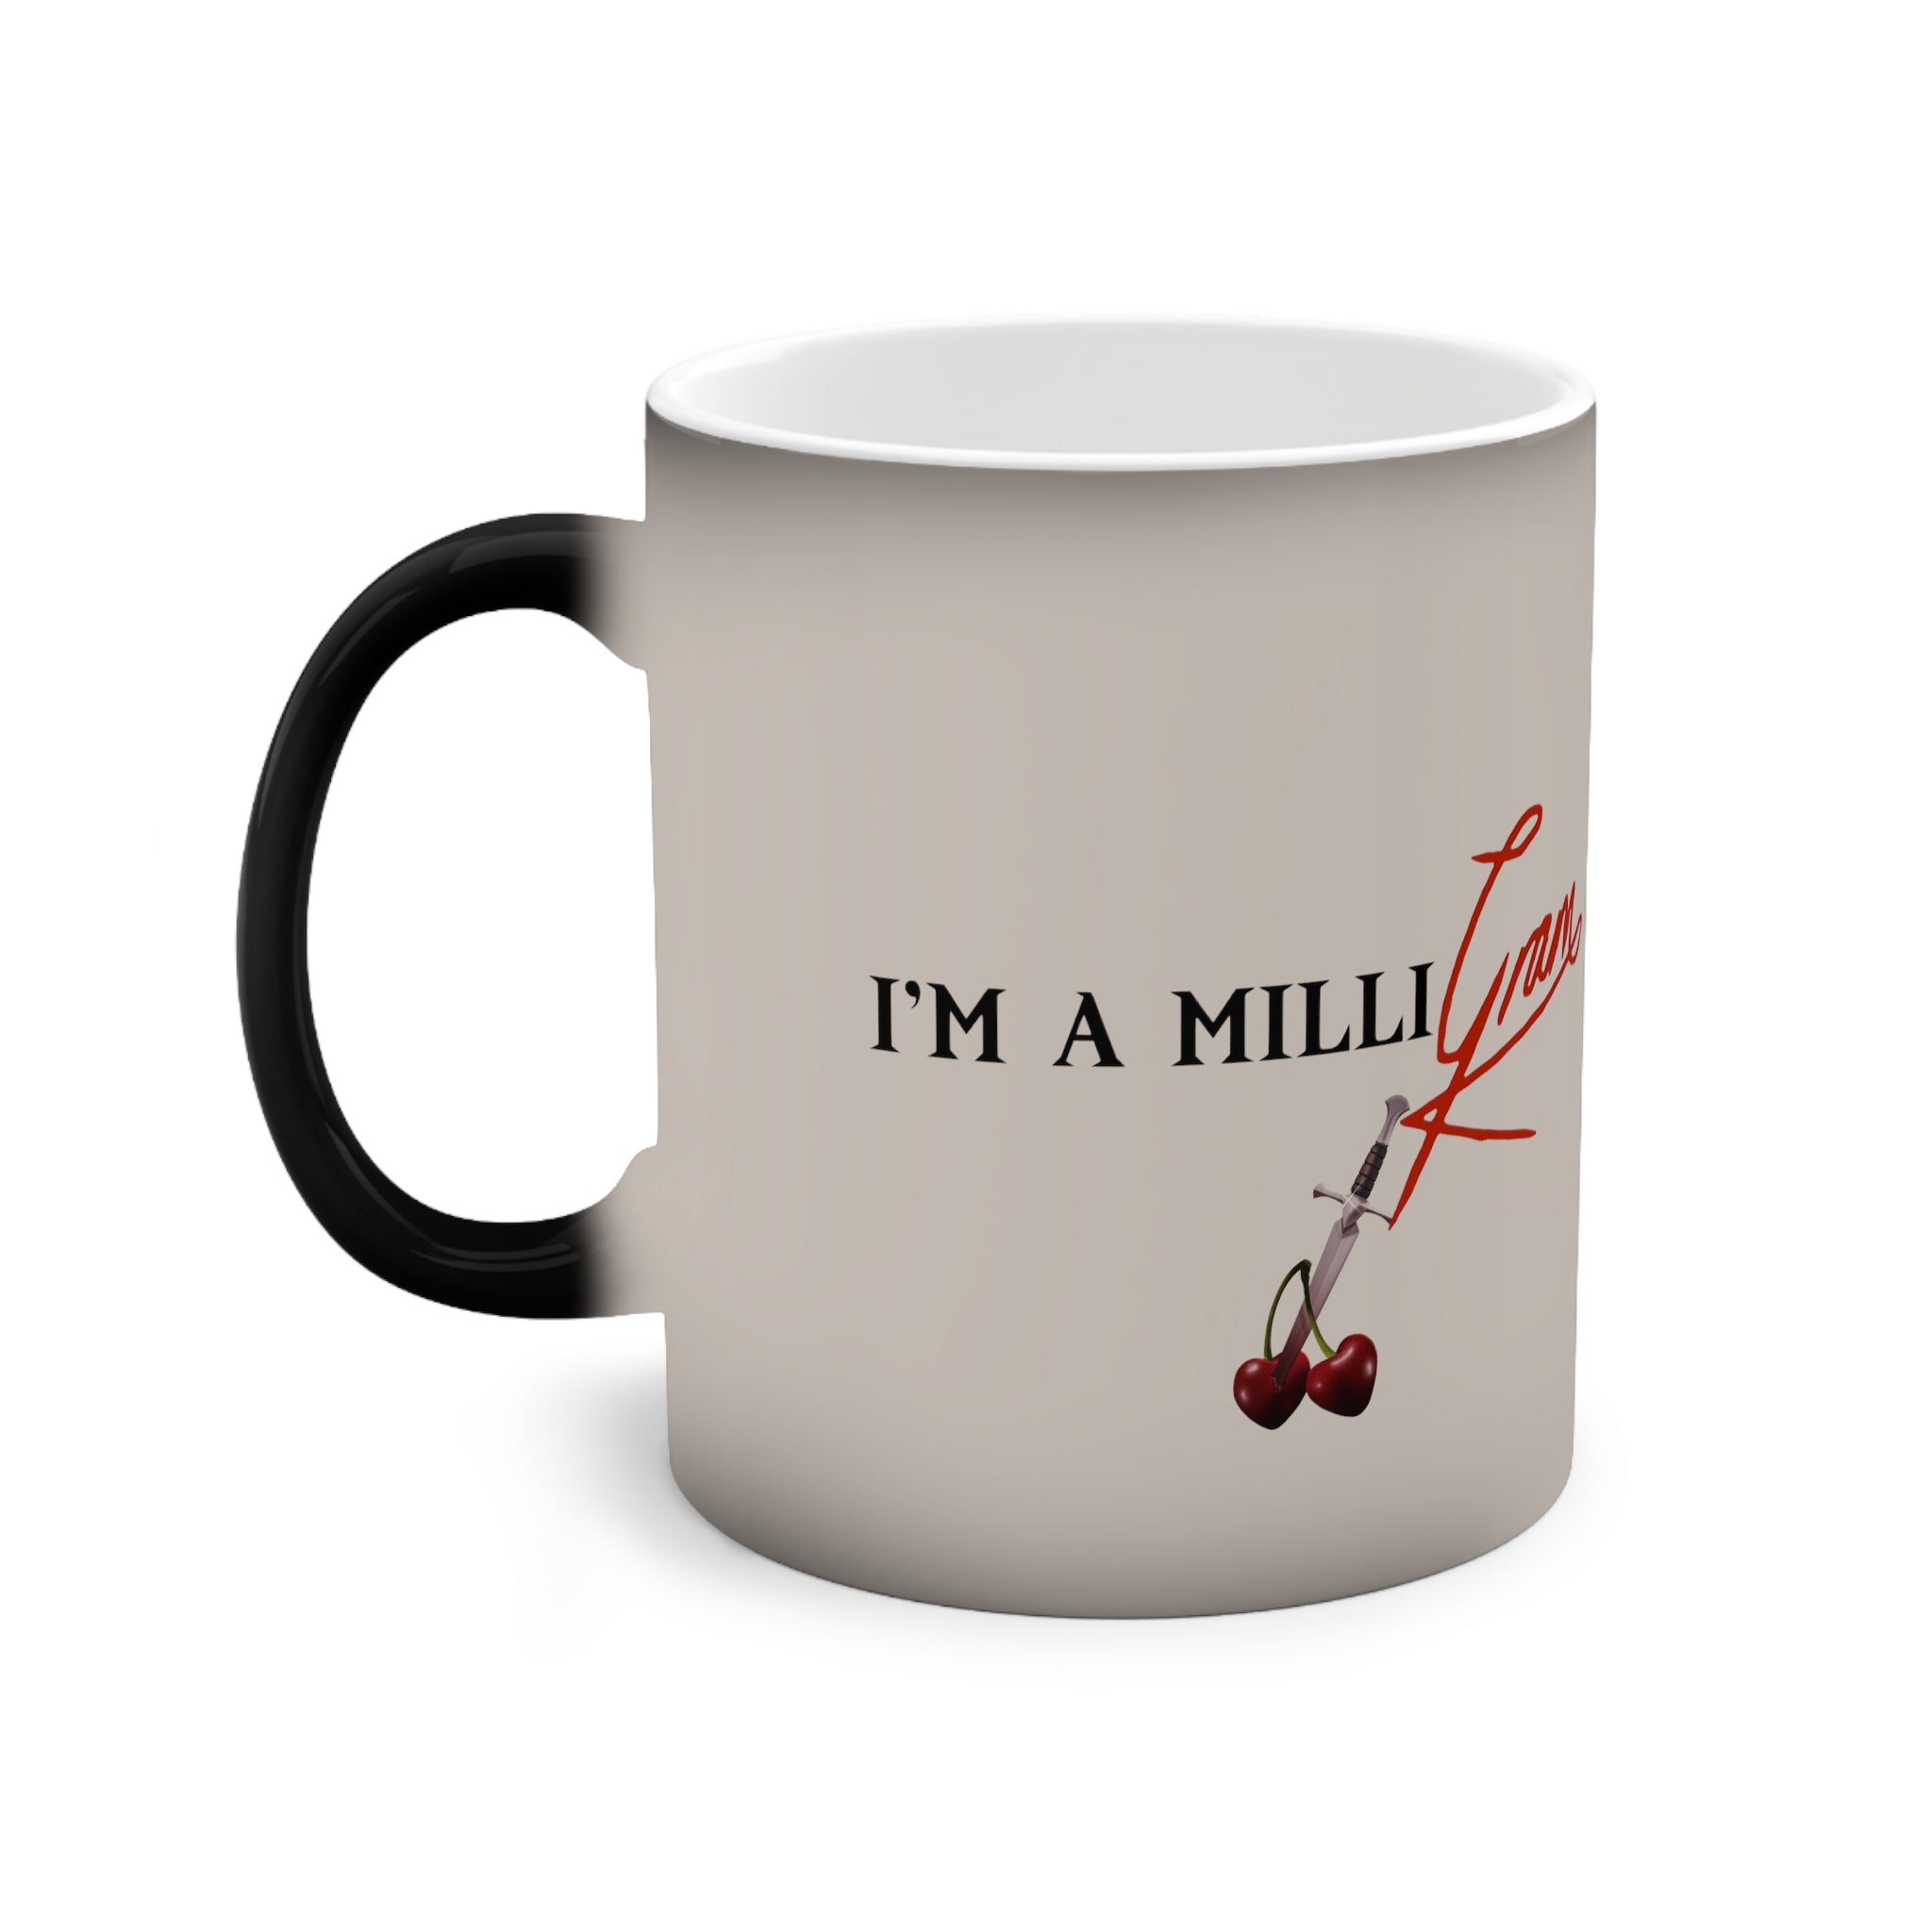 I'm a MilliGram Colour Changing Mug, 11oz